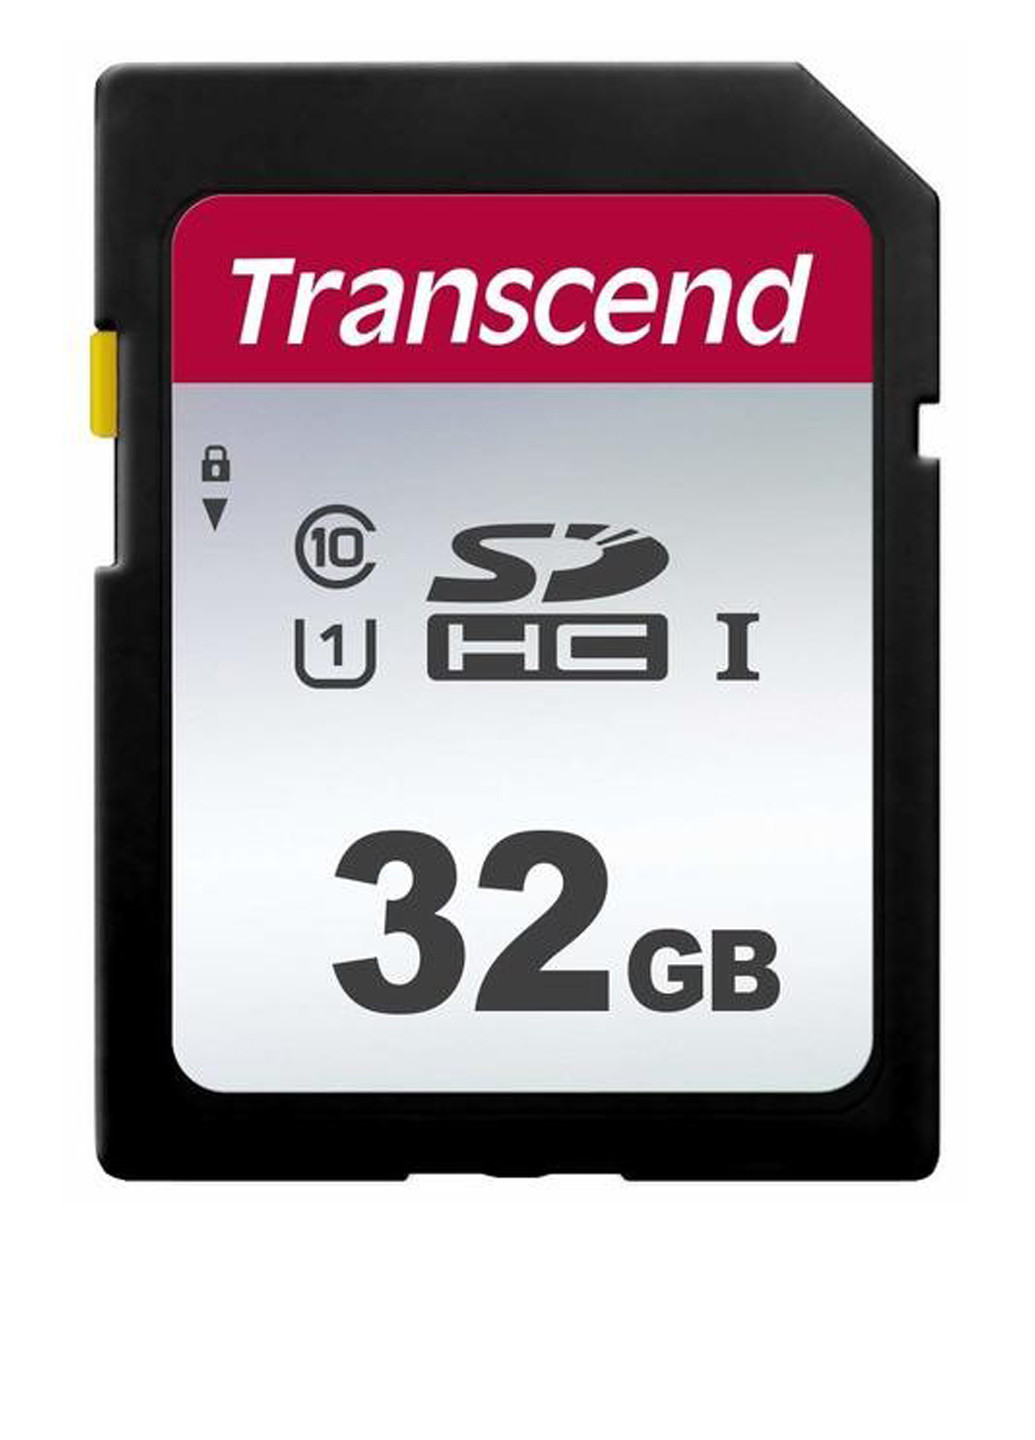 Карта памяти SDHC 32GB C10 UHS-I (R95/W45MB/s) (TS32GSDC300S) Transcend карта памяти transcend sdhc 32gb c10 uhs-i (r95/w45mb/s) (ts32gsdc300s) (135316913)